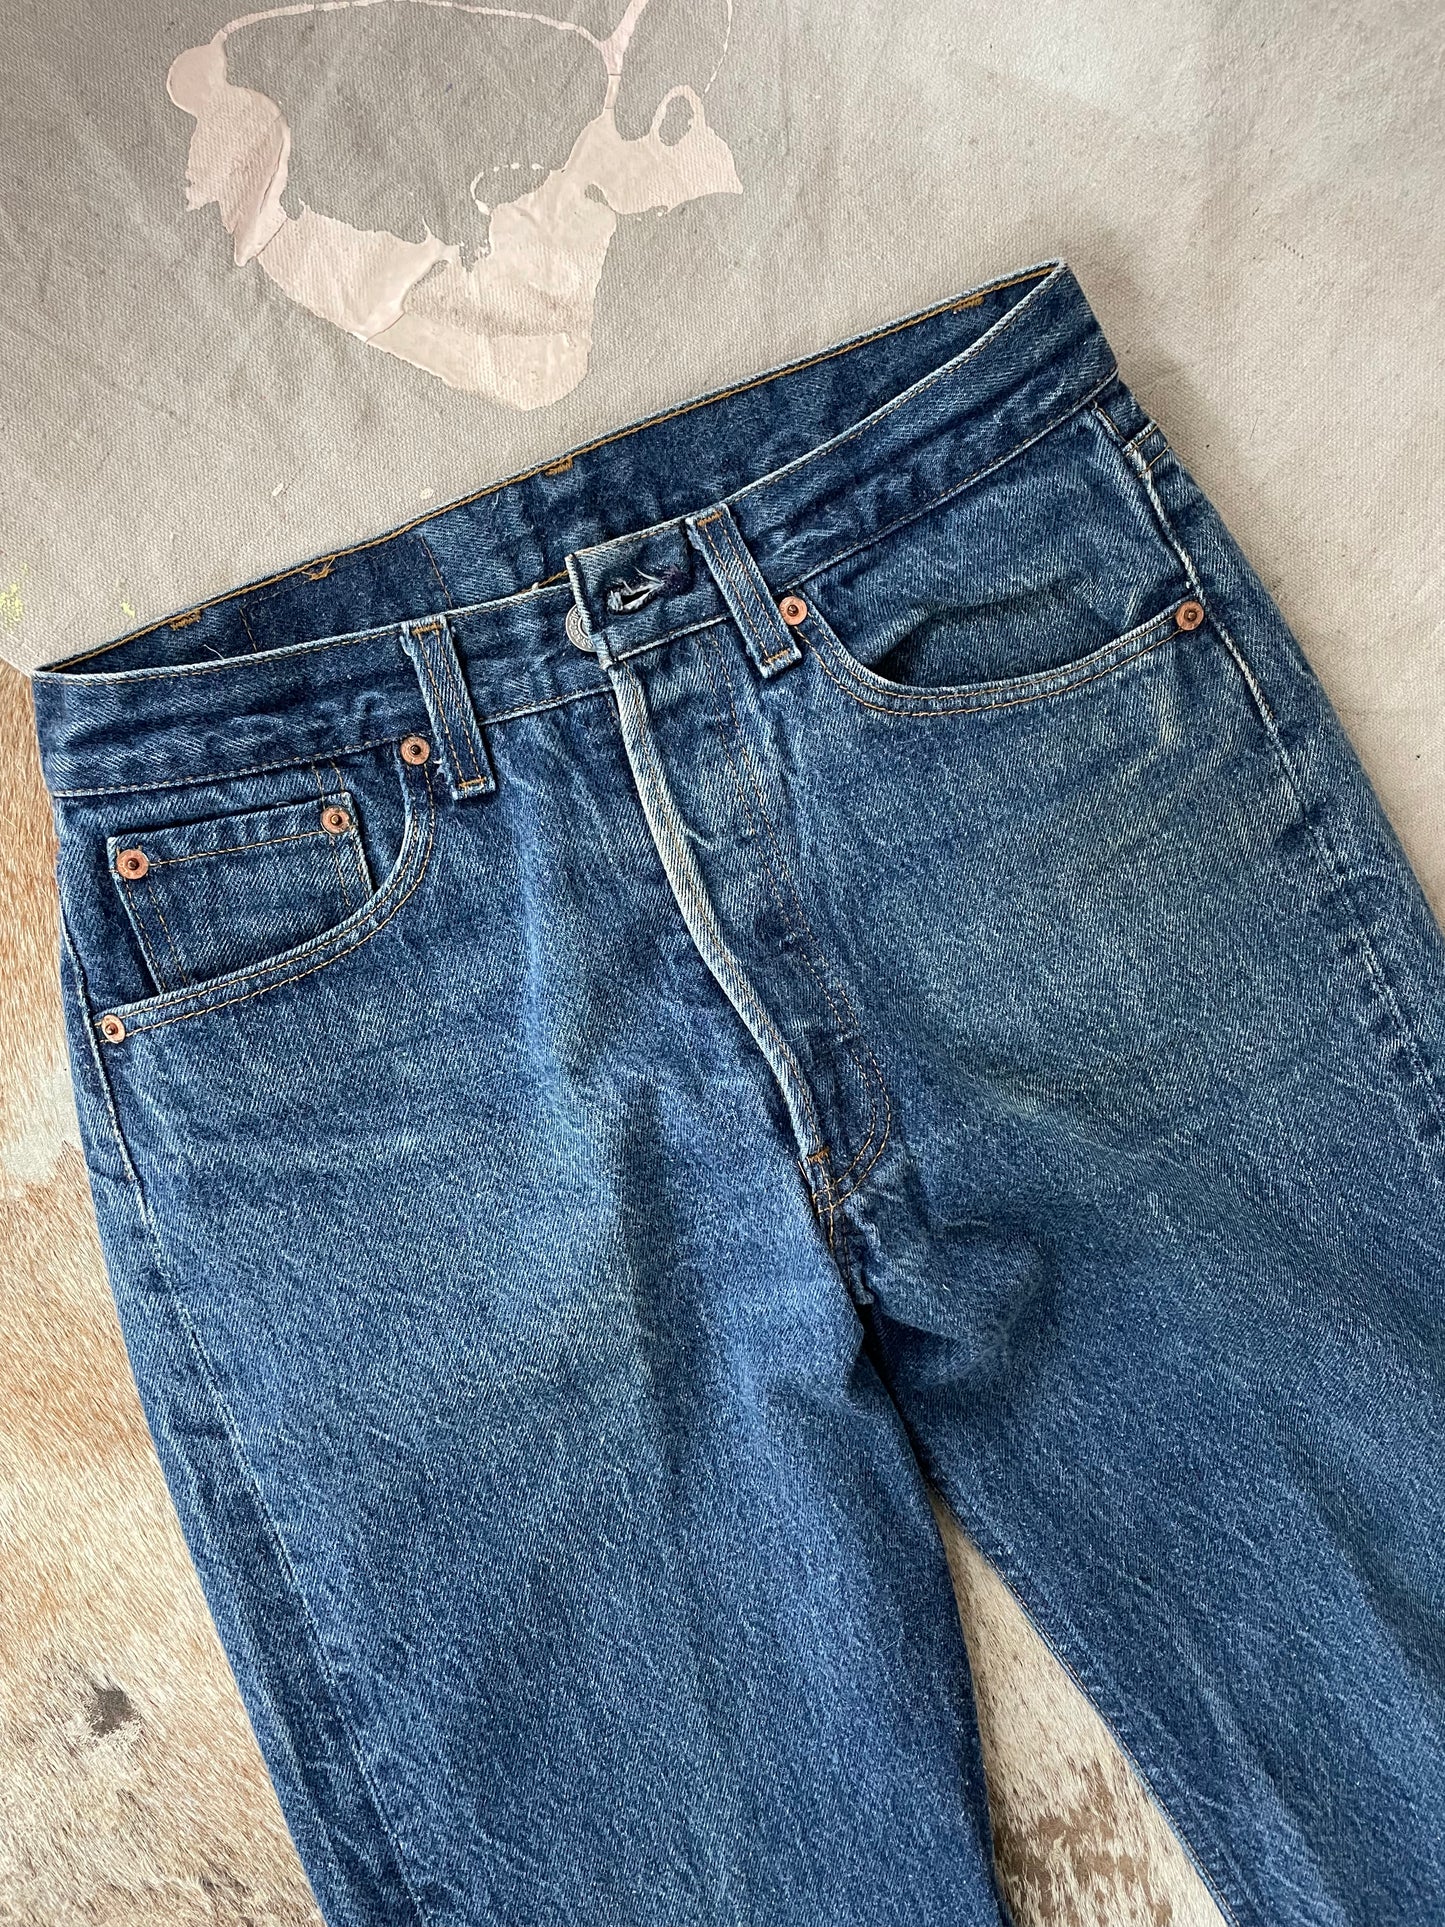 90s Levi’s 501’s Jeans